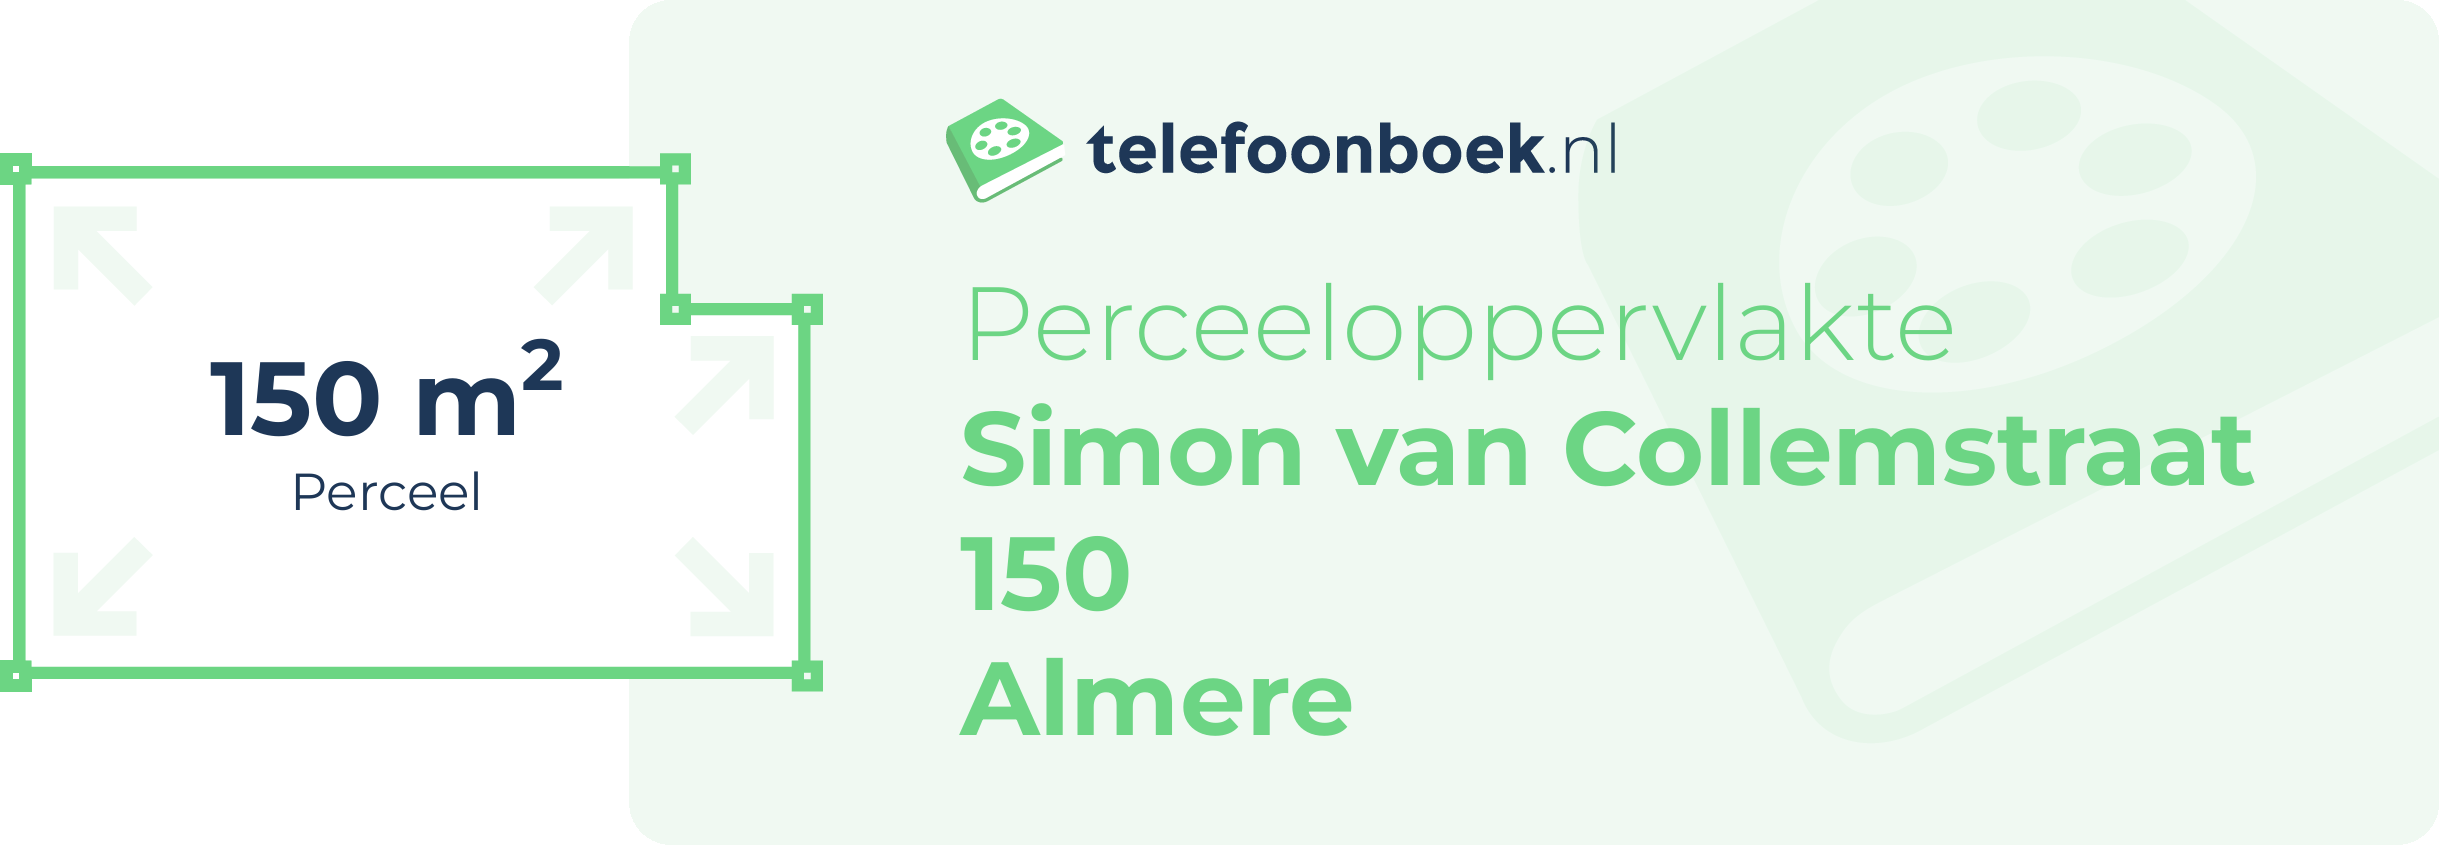 Perceeloppervlakte Simon Van Collemstraat 150 Almere